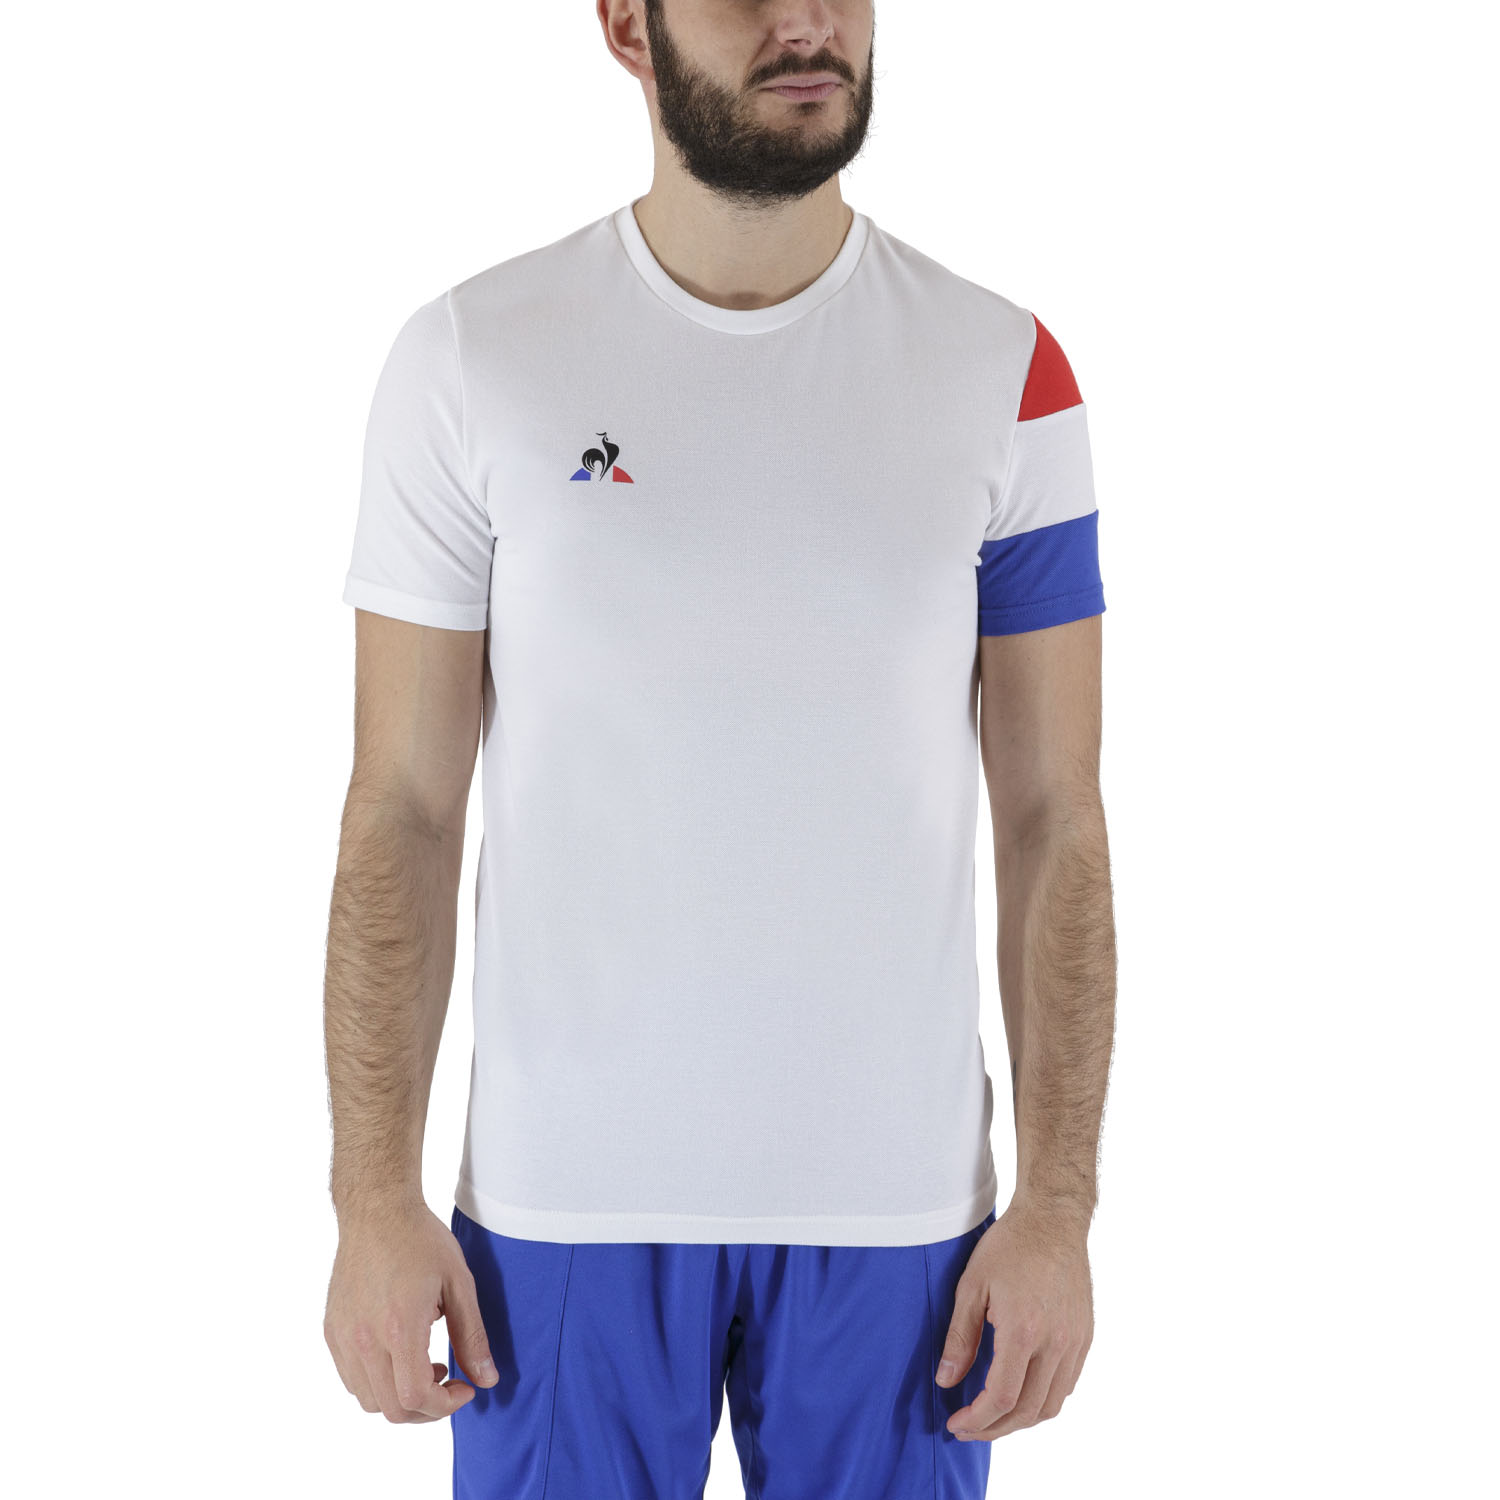 Le Coq Sportif Match T-Shirt - New Optical White/Cobalt